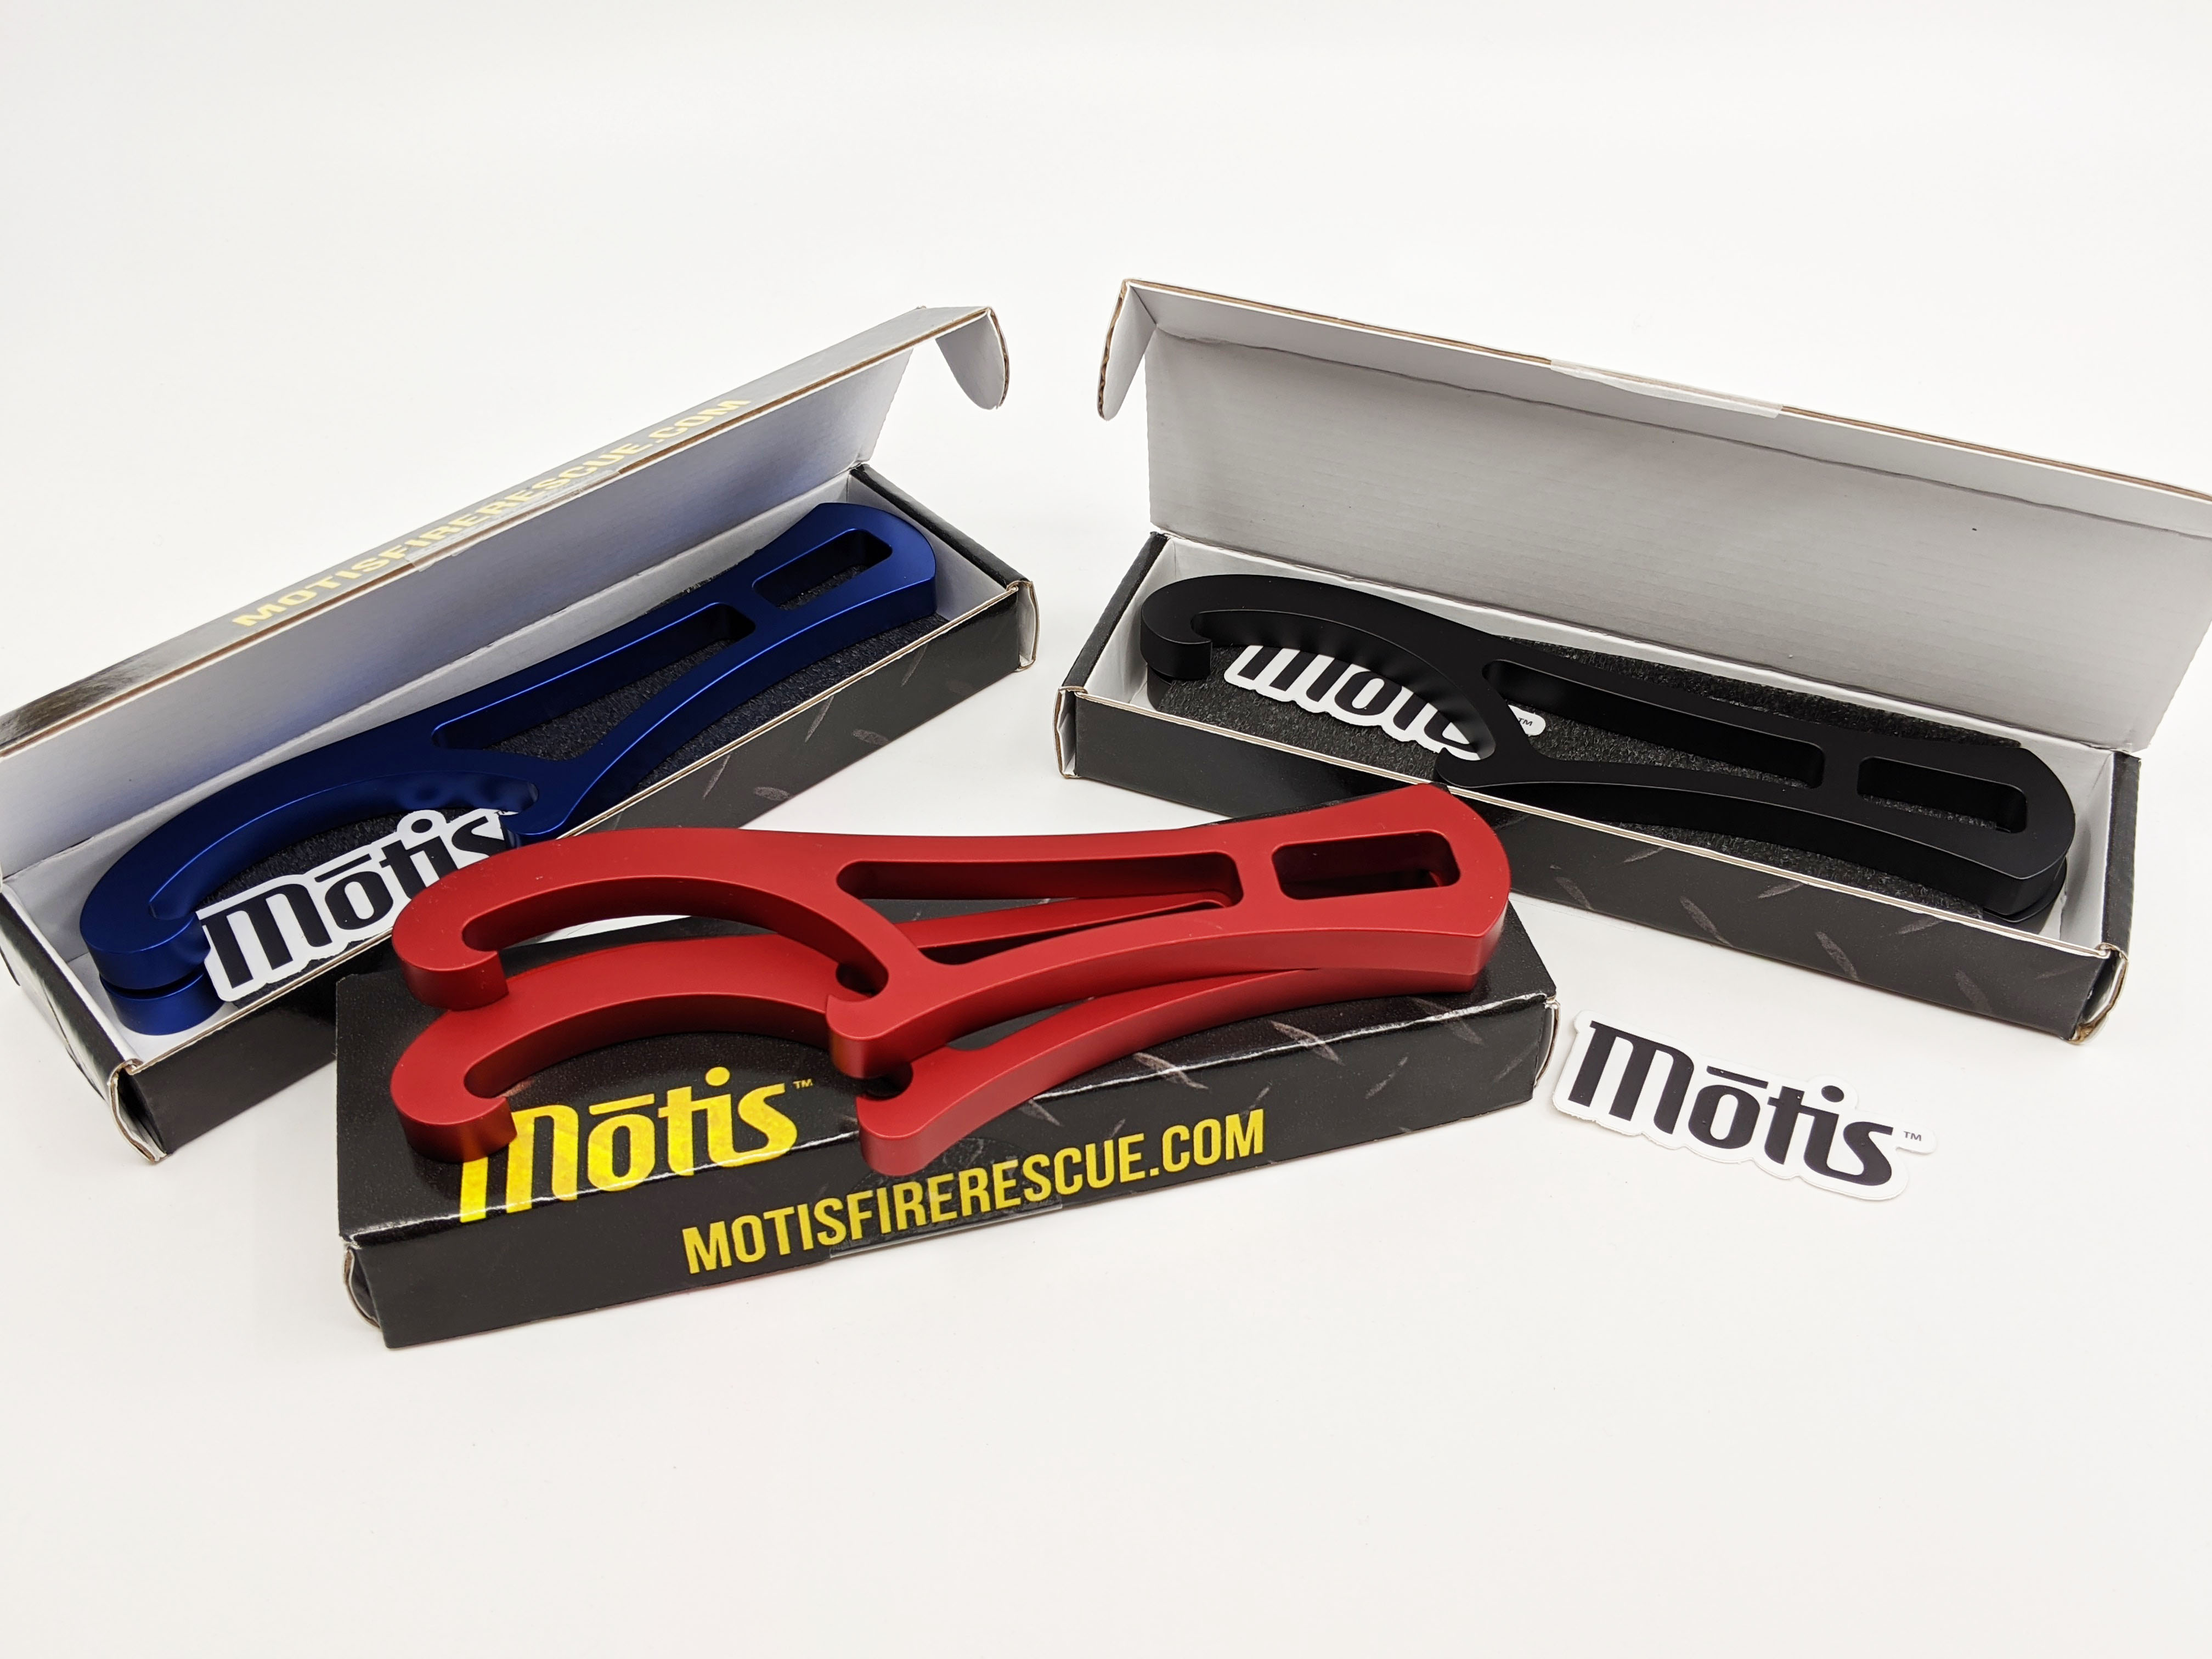 Snagger Tool by Motis — Motis Fire Rescue Canada